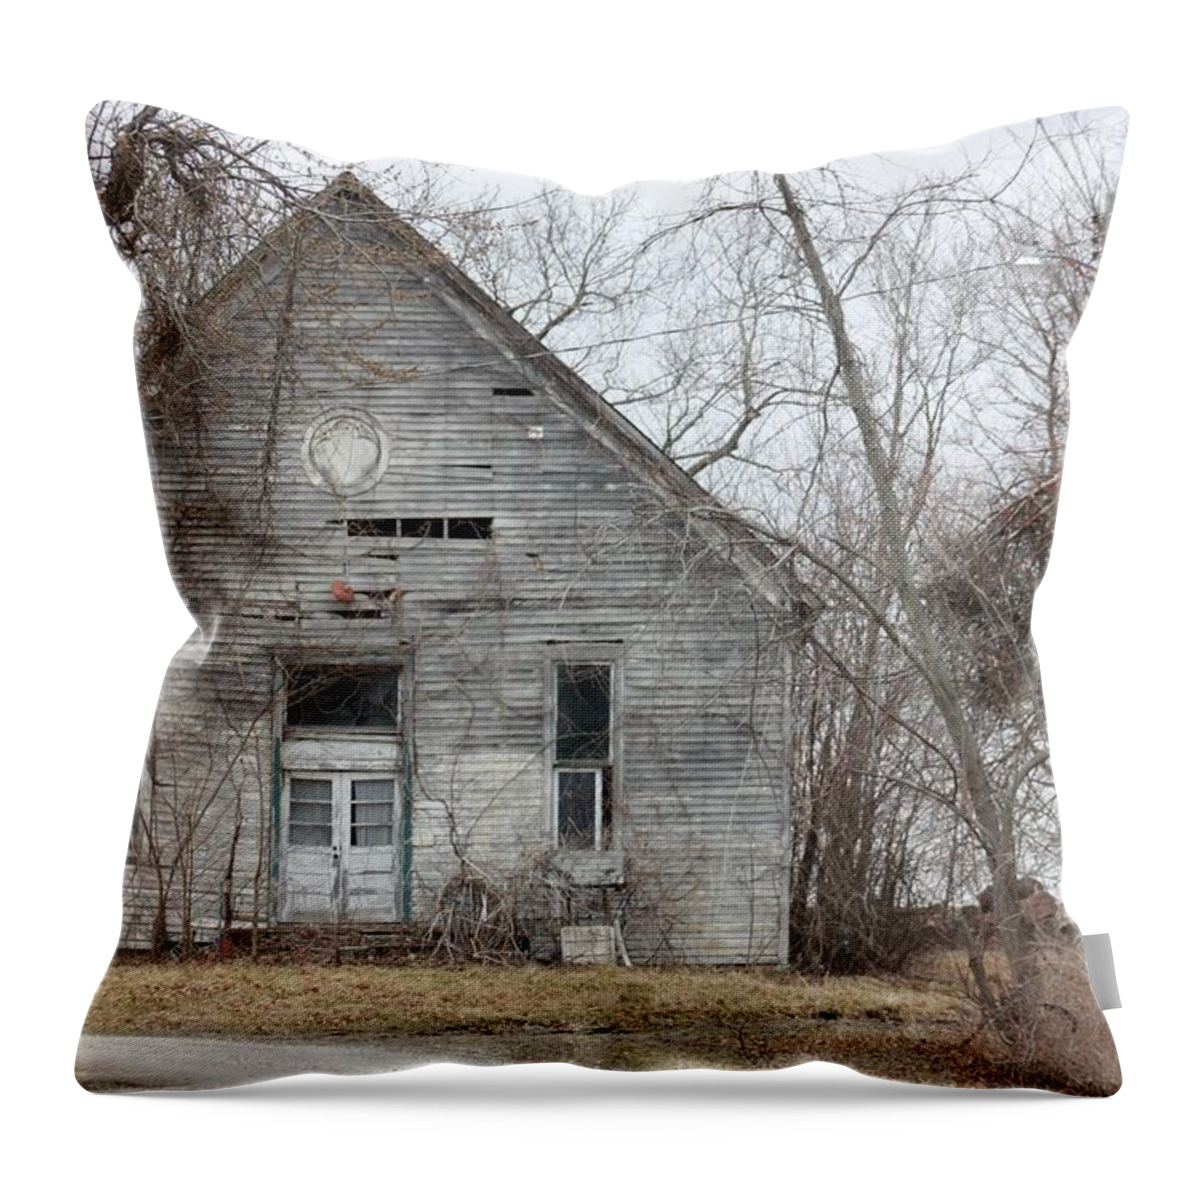 Roanoke Throw Pillow featuring the photograph Roanoke Missouri Building by Kathryn Cornett